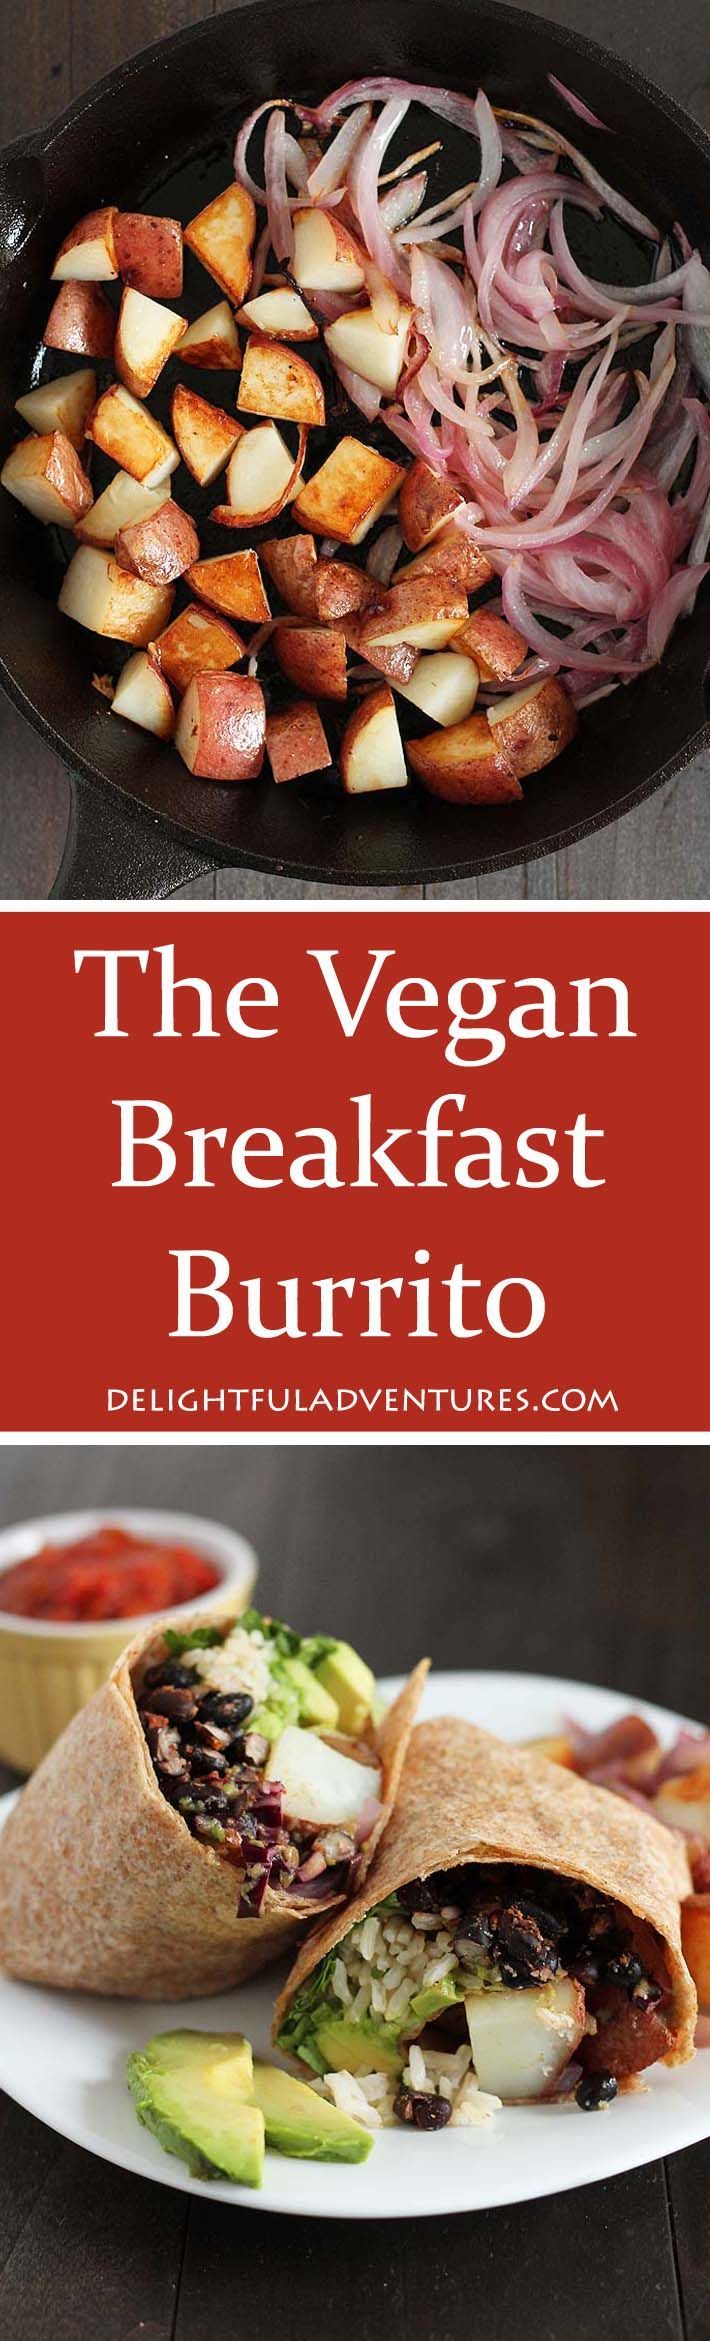 Love breakfast burritos? Well, you’re going to love this Vegan Breakfast Burrito recipe from the Minimalist Baker’s new recipe